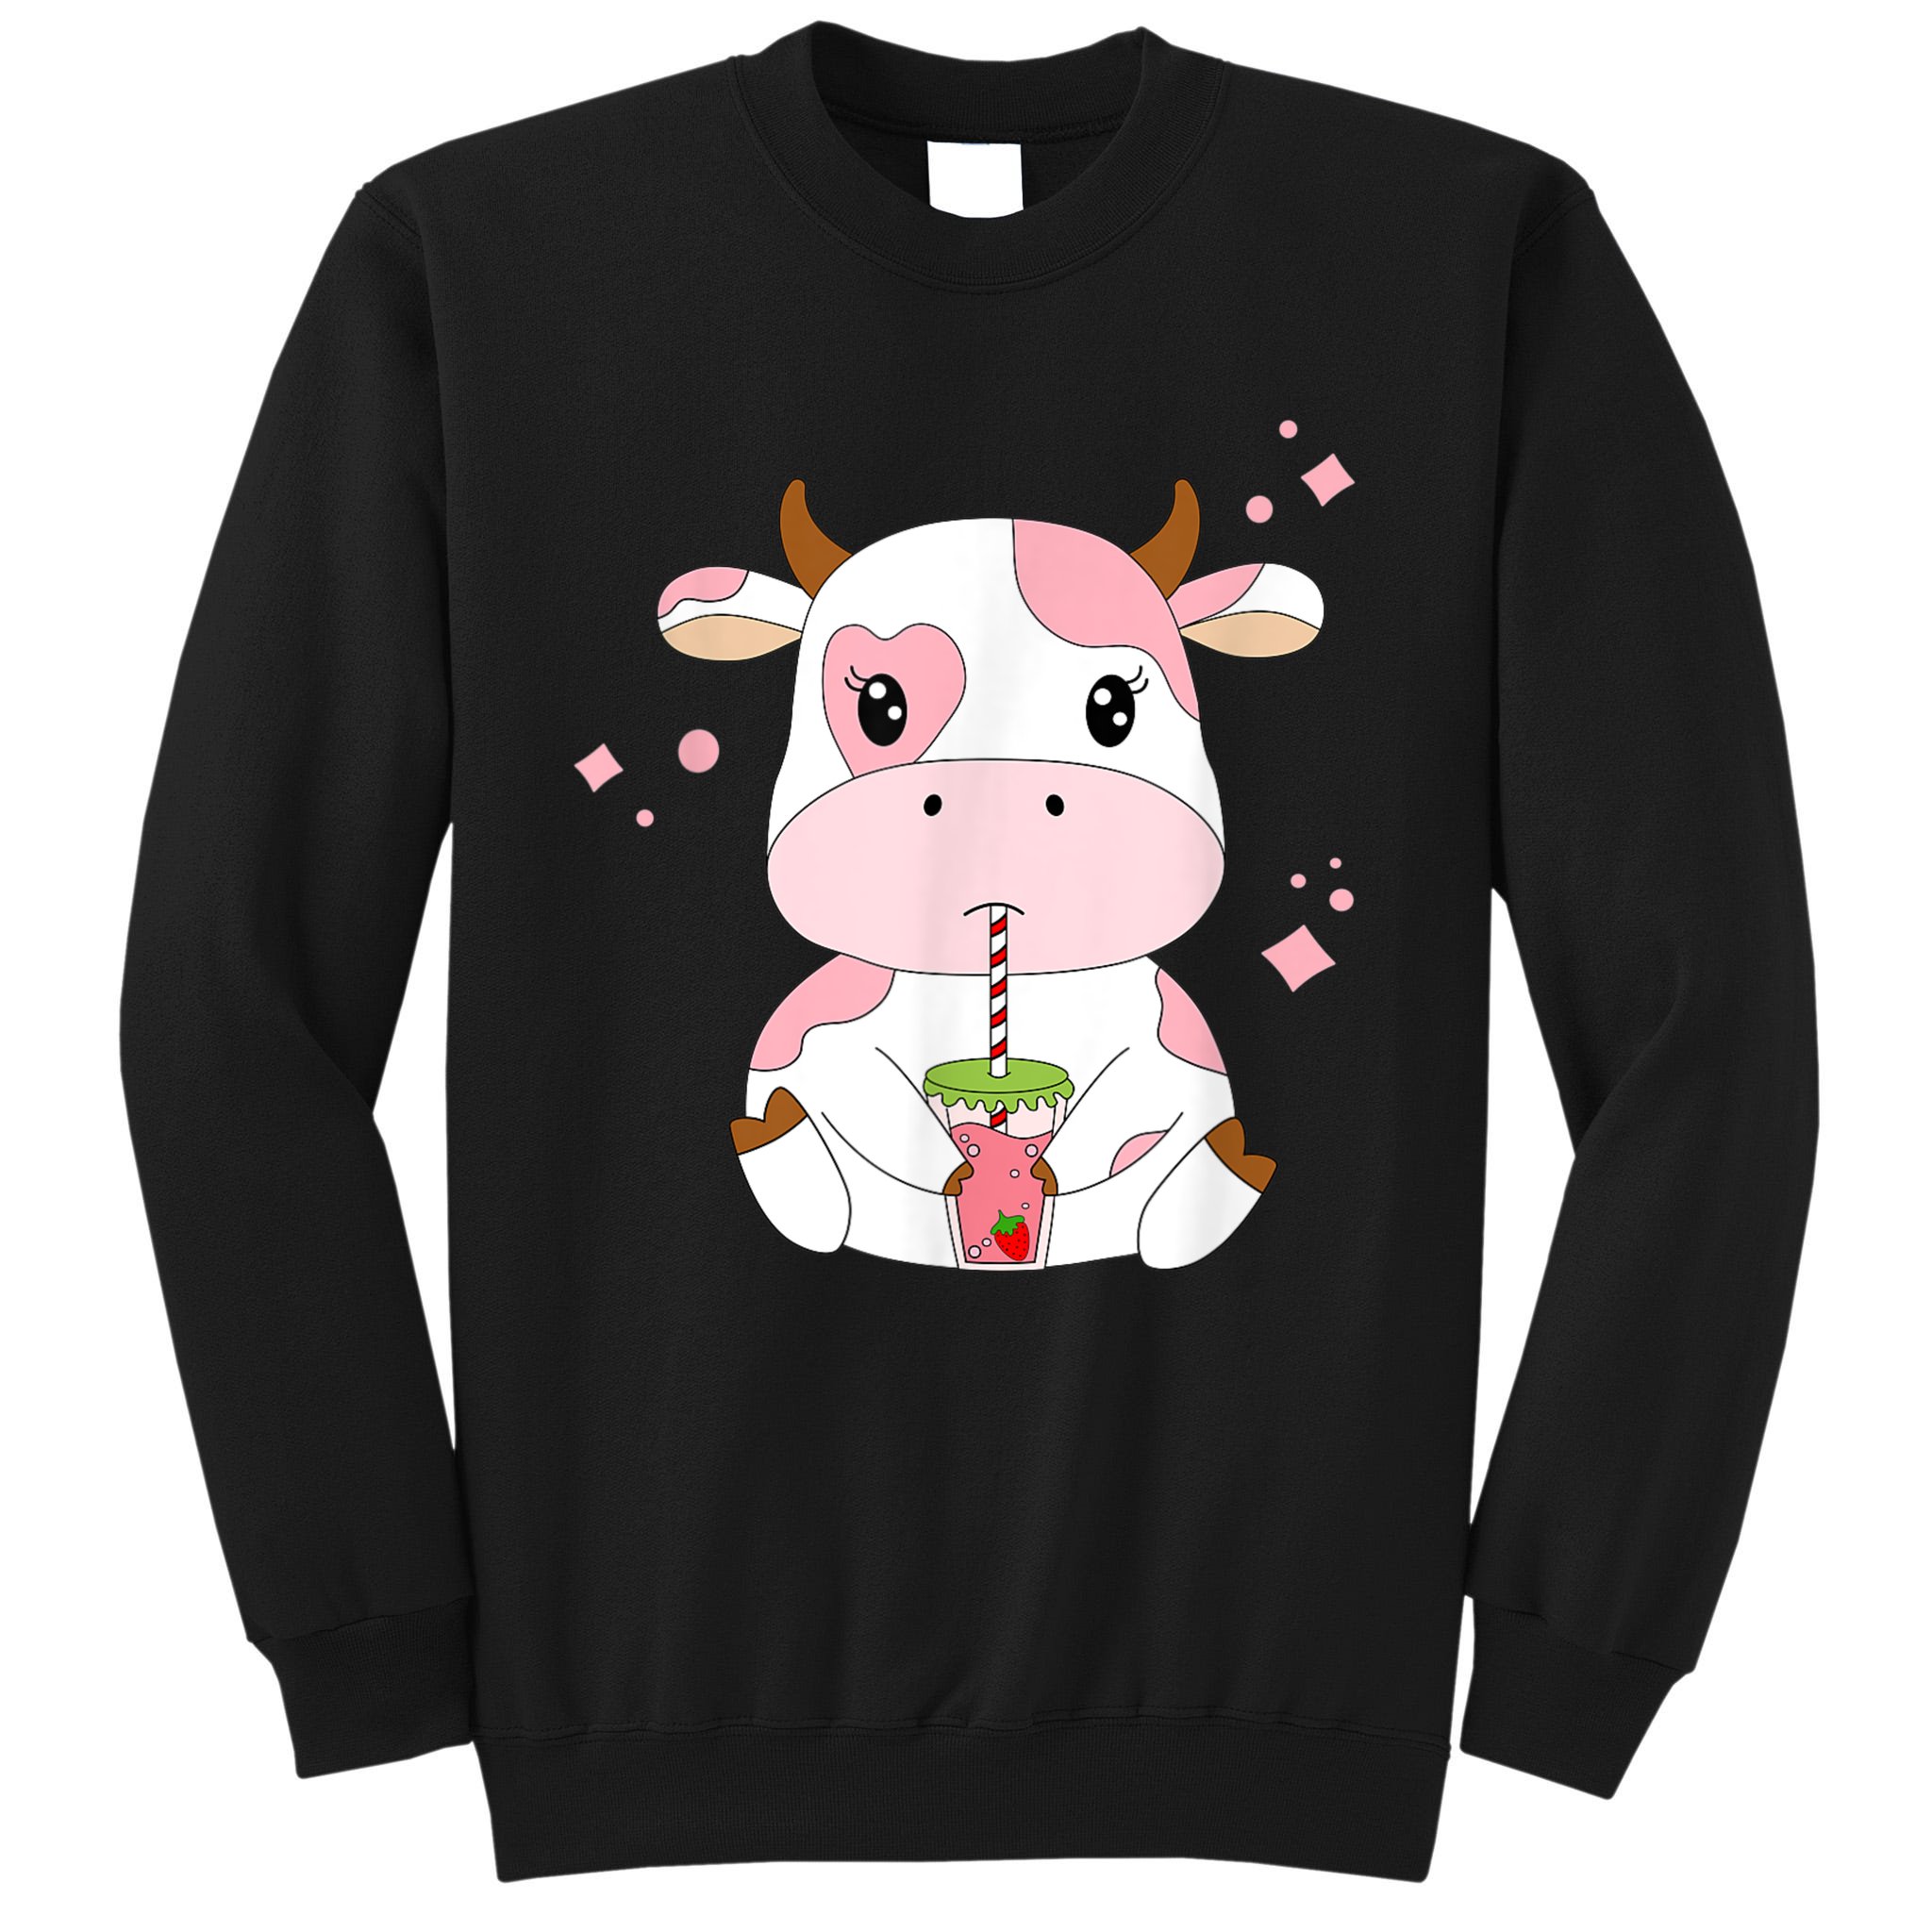 Sweet pink cow  Diseño de camiseta gratis, Camisetas de chica, Cosas gratis